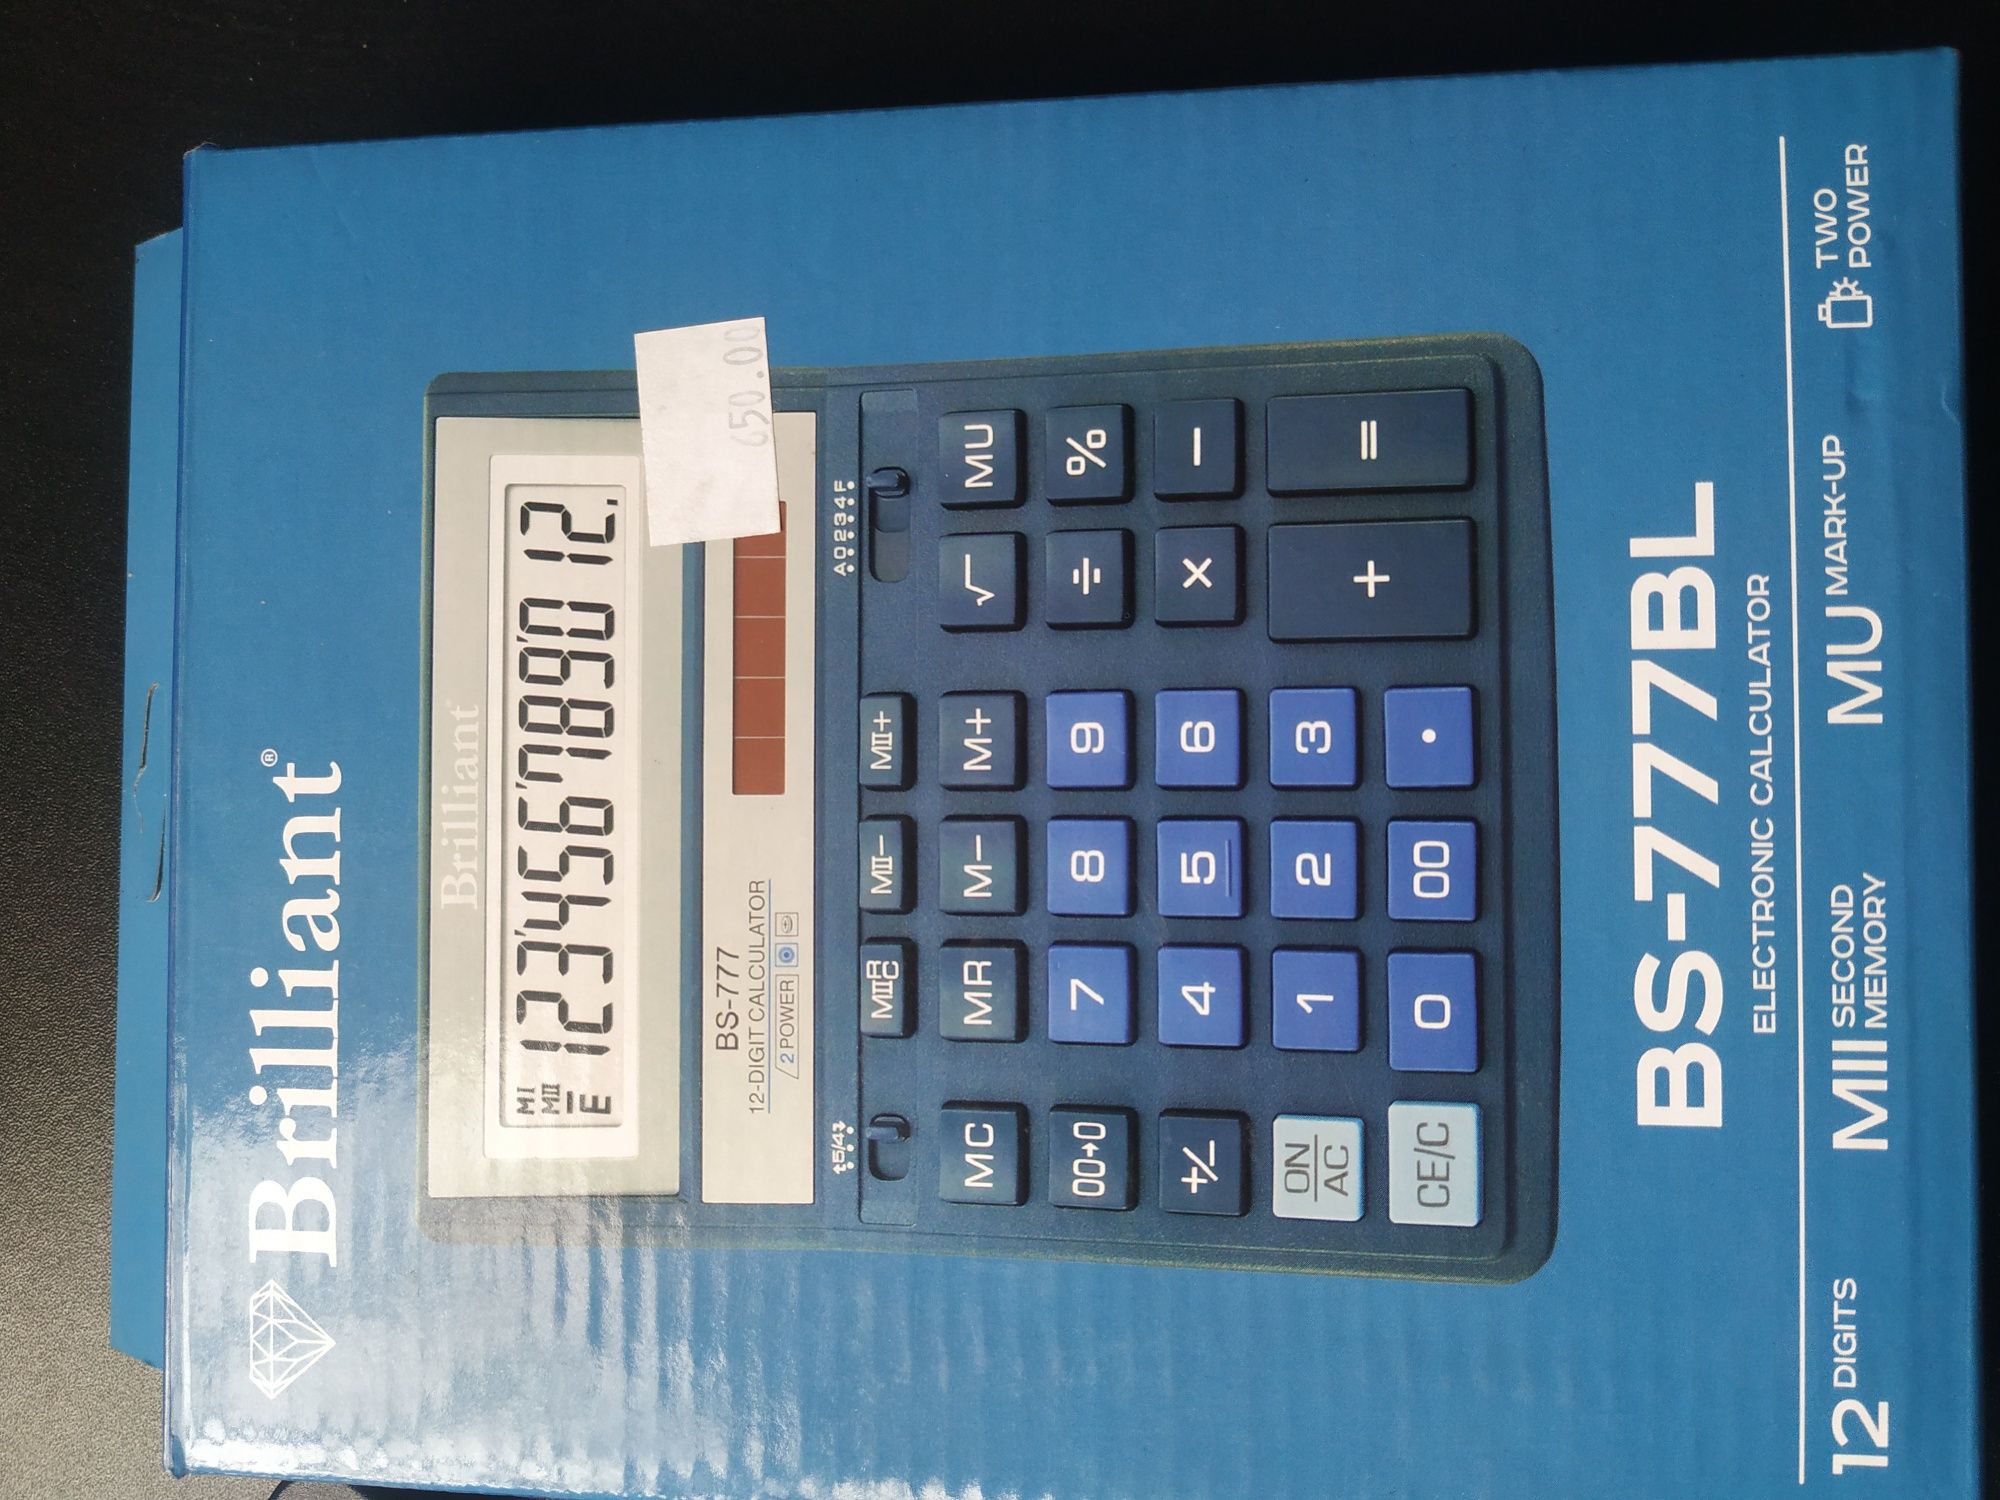 Калькулятор Brilliant BS-777BL